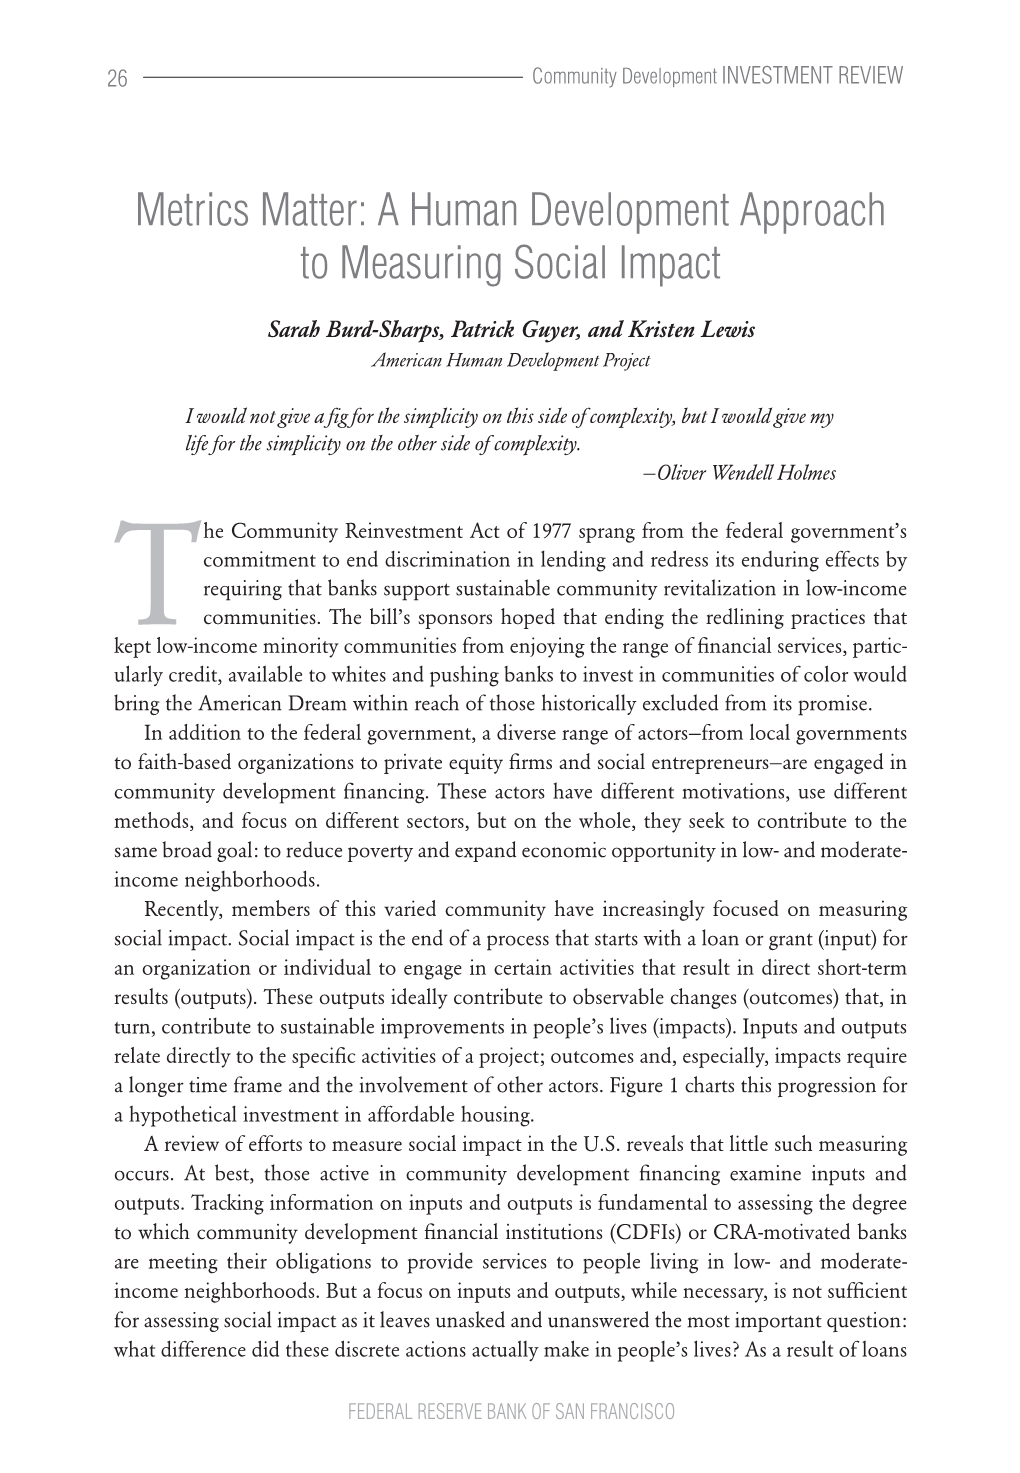 Metrics Matter: a Human Development Approach to Measuring Social Impact